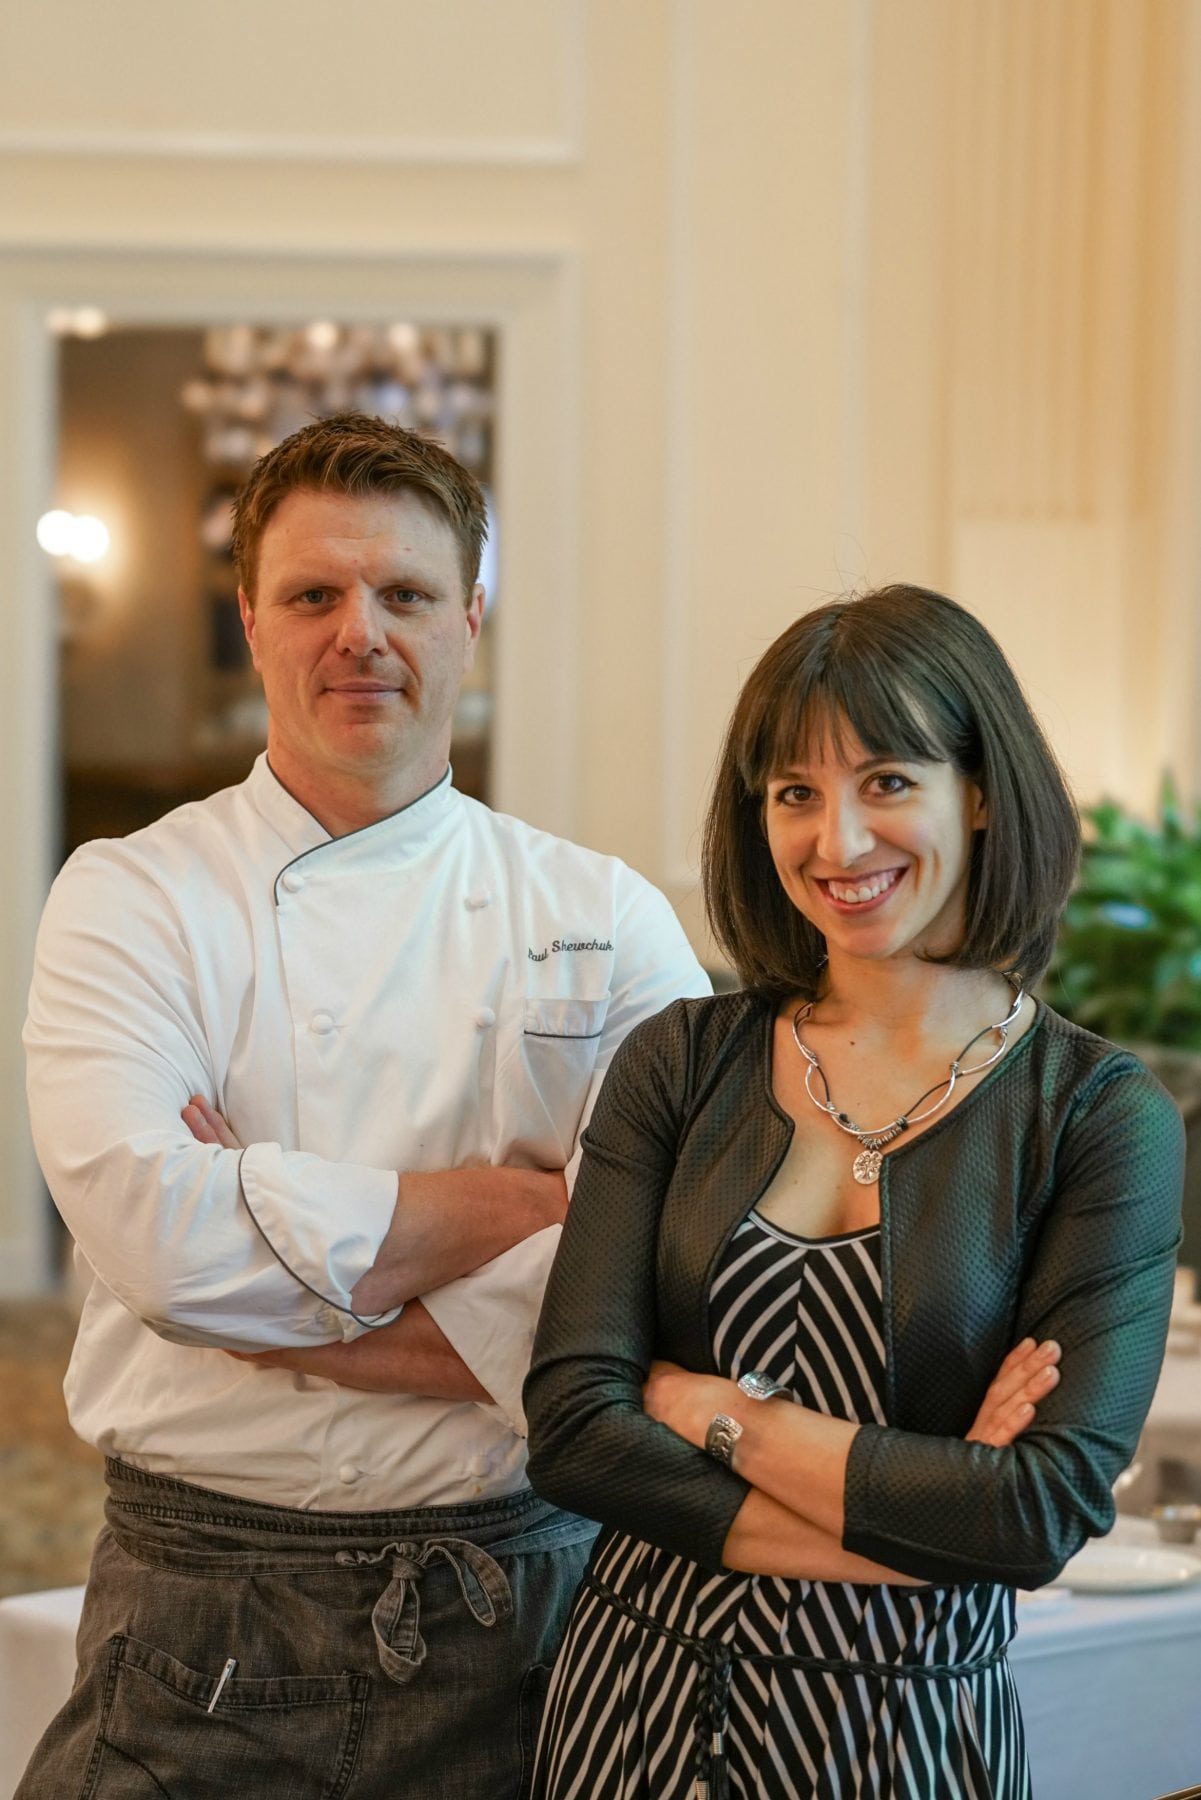 Ambra Torelli with Chef Paul Shewchuk